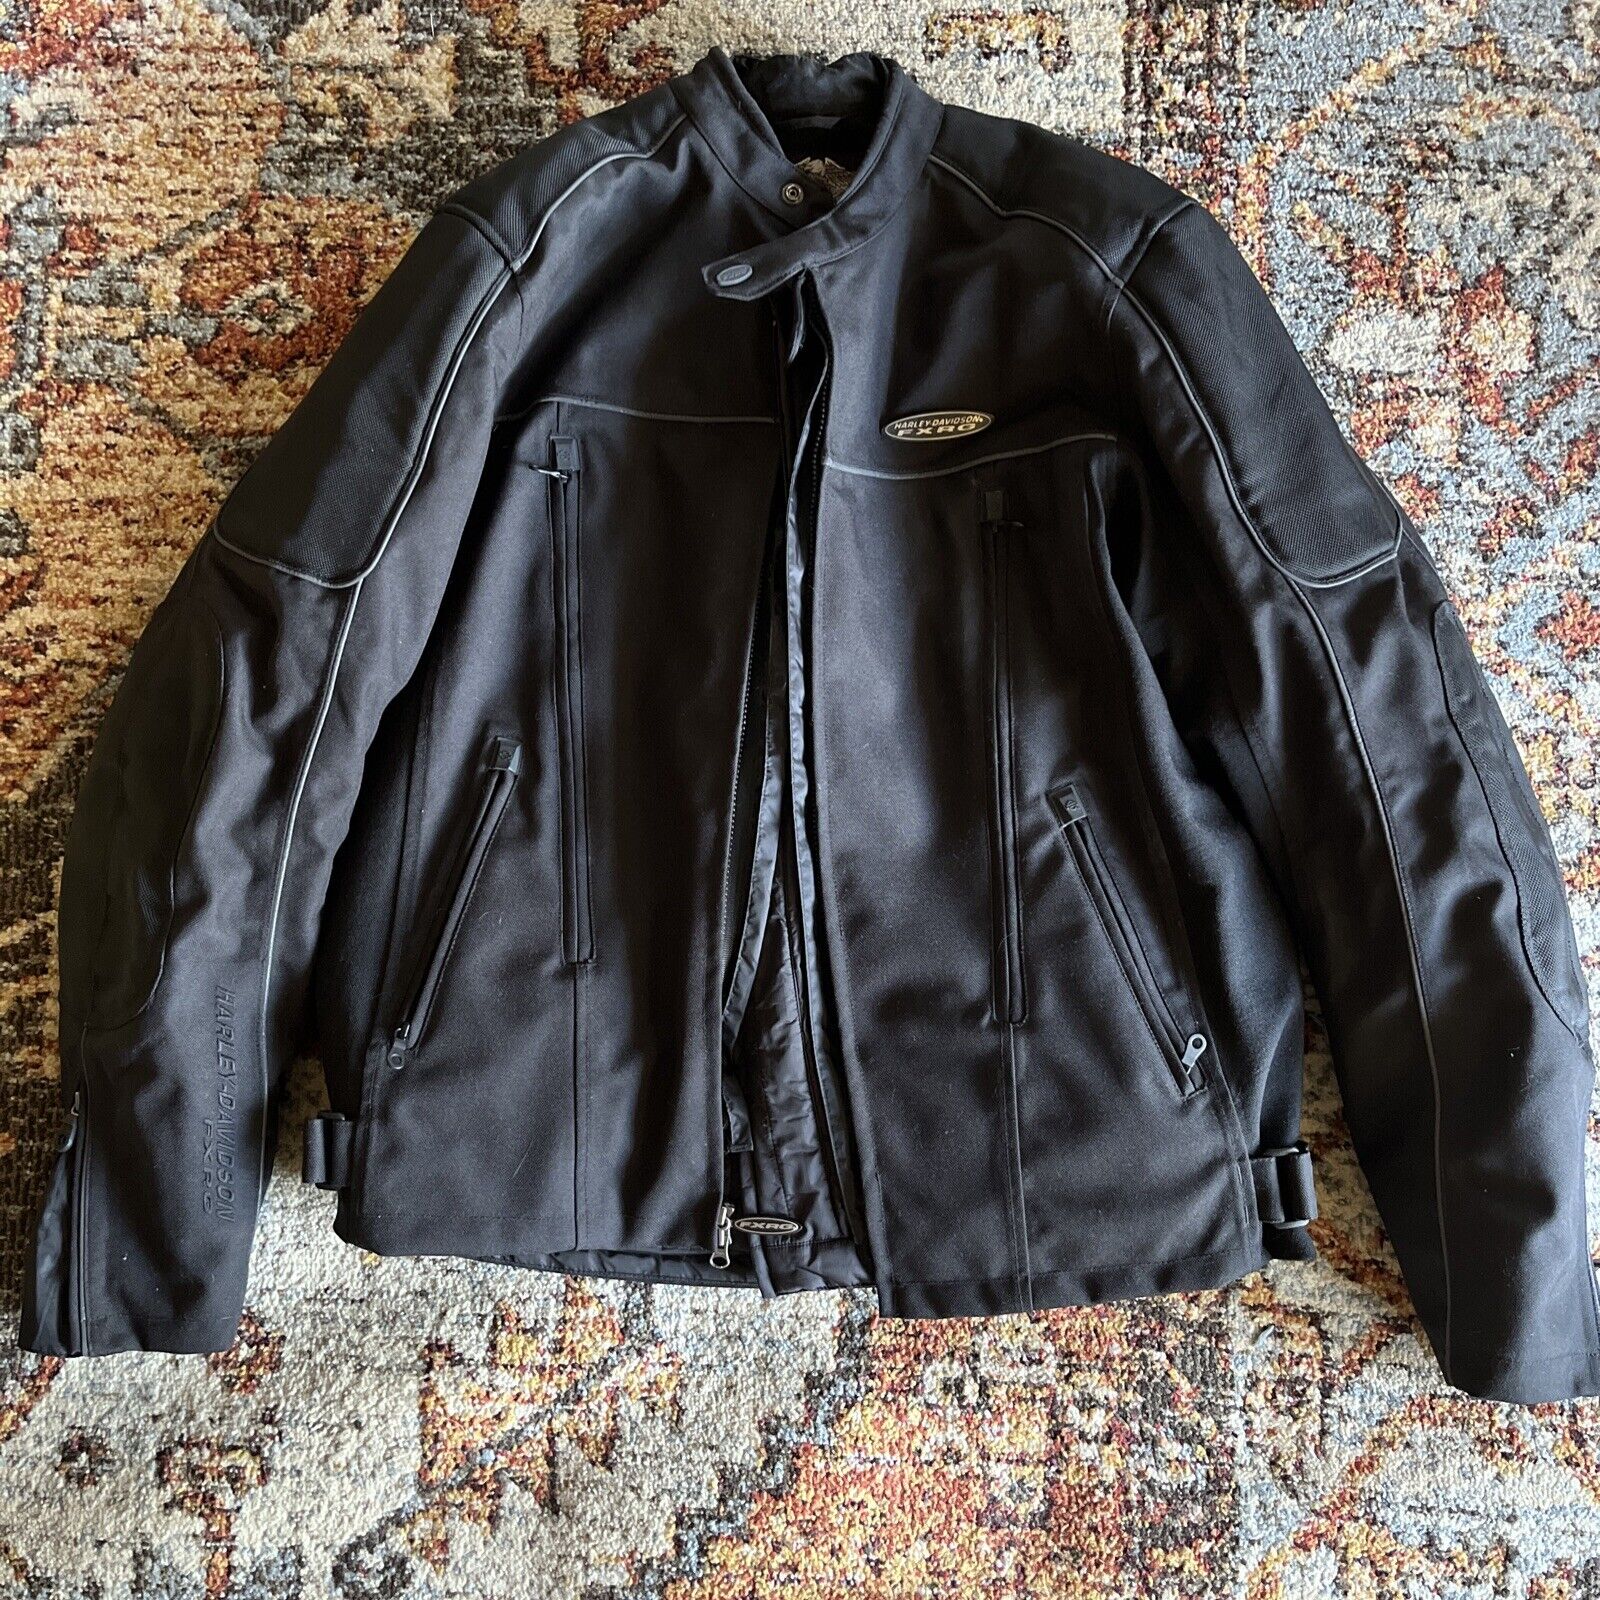 Harley Davidson Nylon FXRG Riding Jacket Size XL/Vest Inside/Excellent Condition